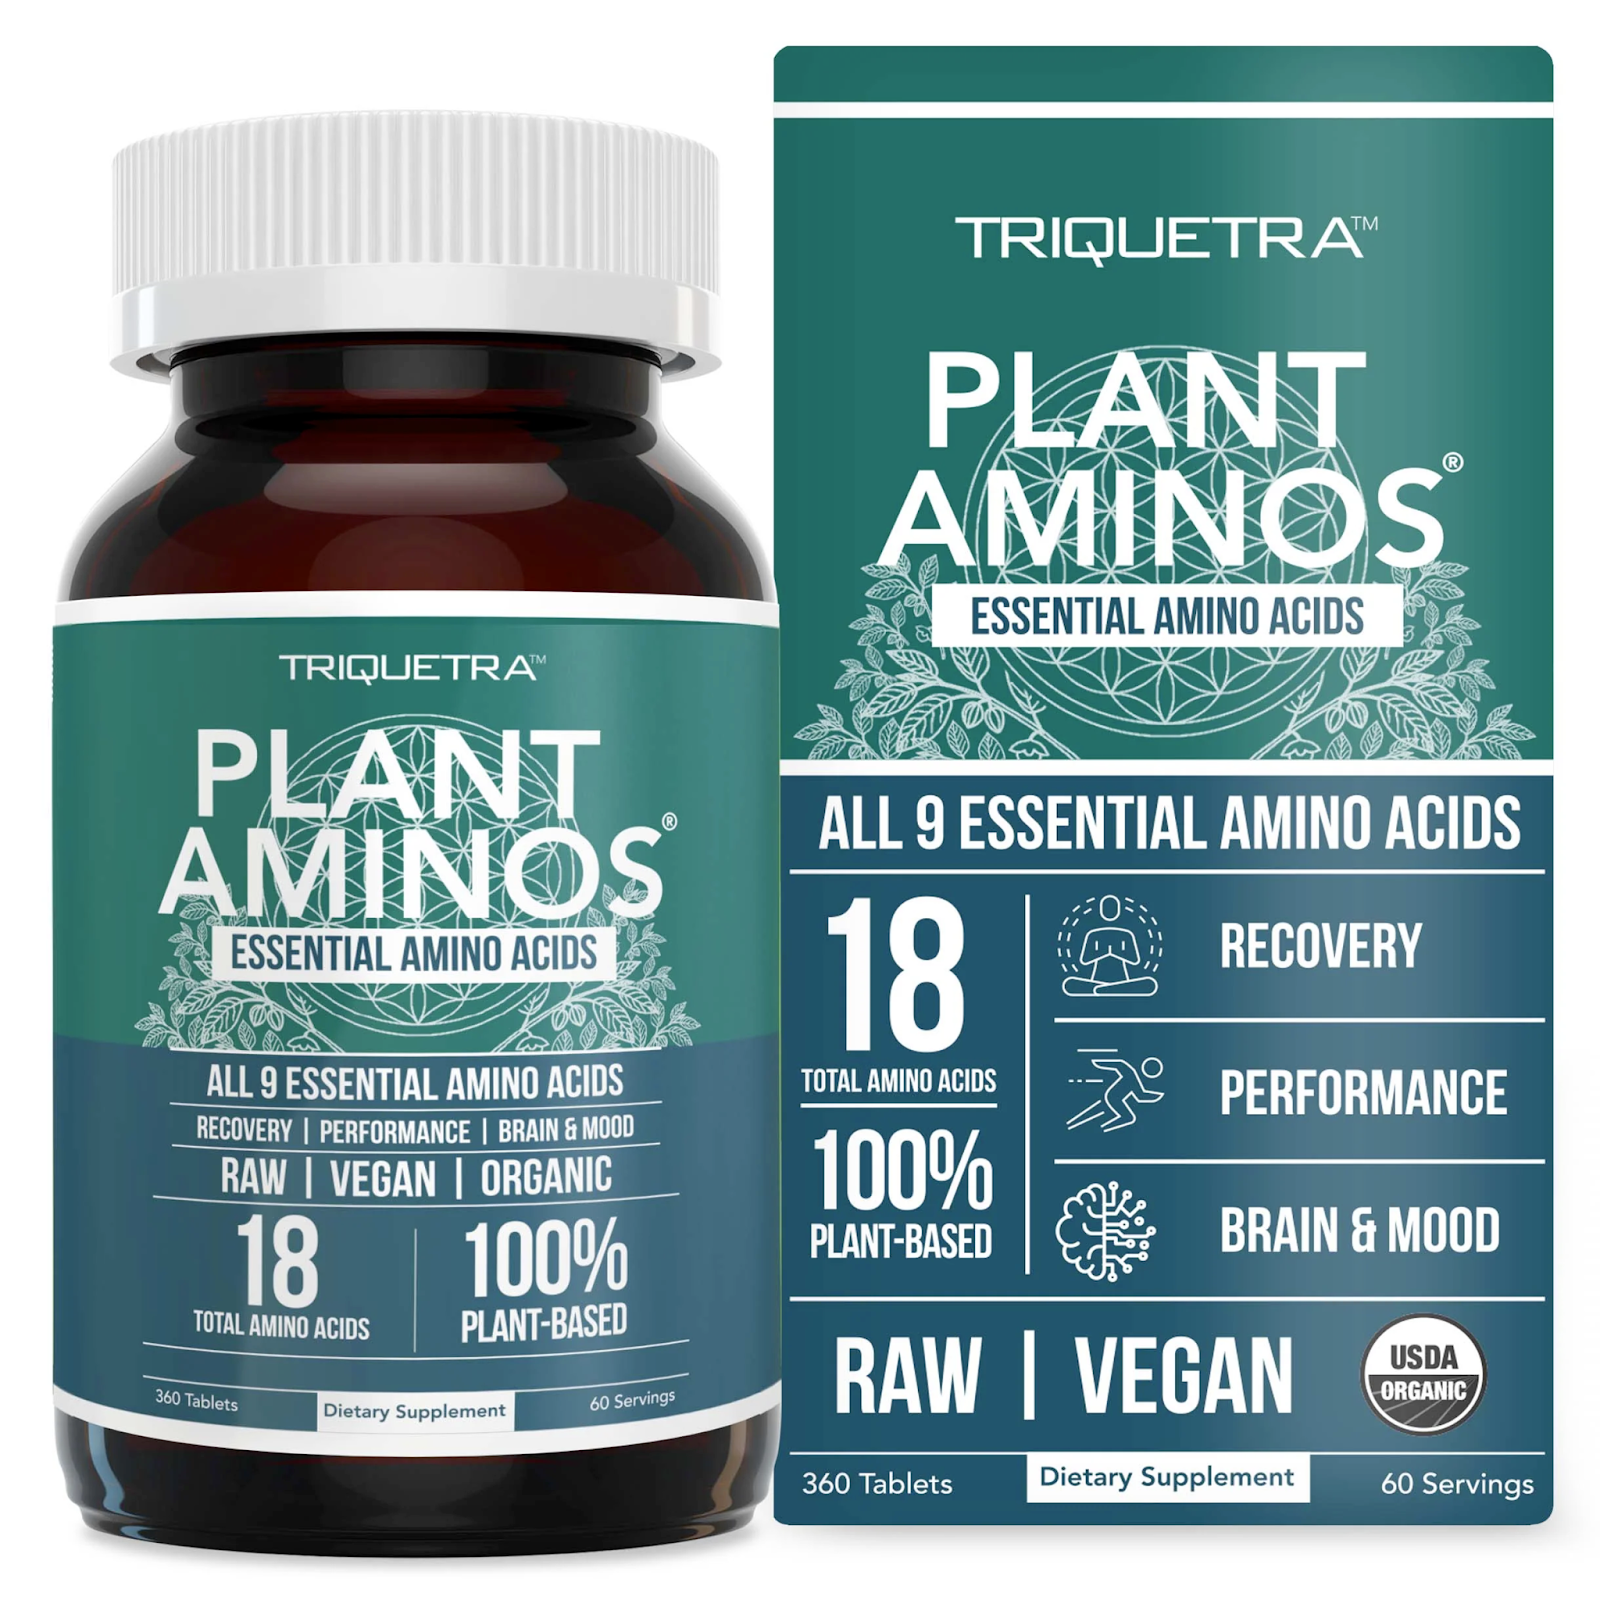 A tub of Triquetra Plant Aminos Organic Essential Amino Acids. 100% plant-based.